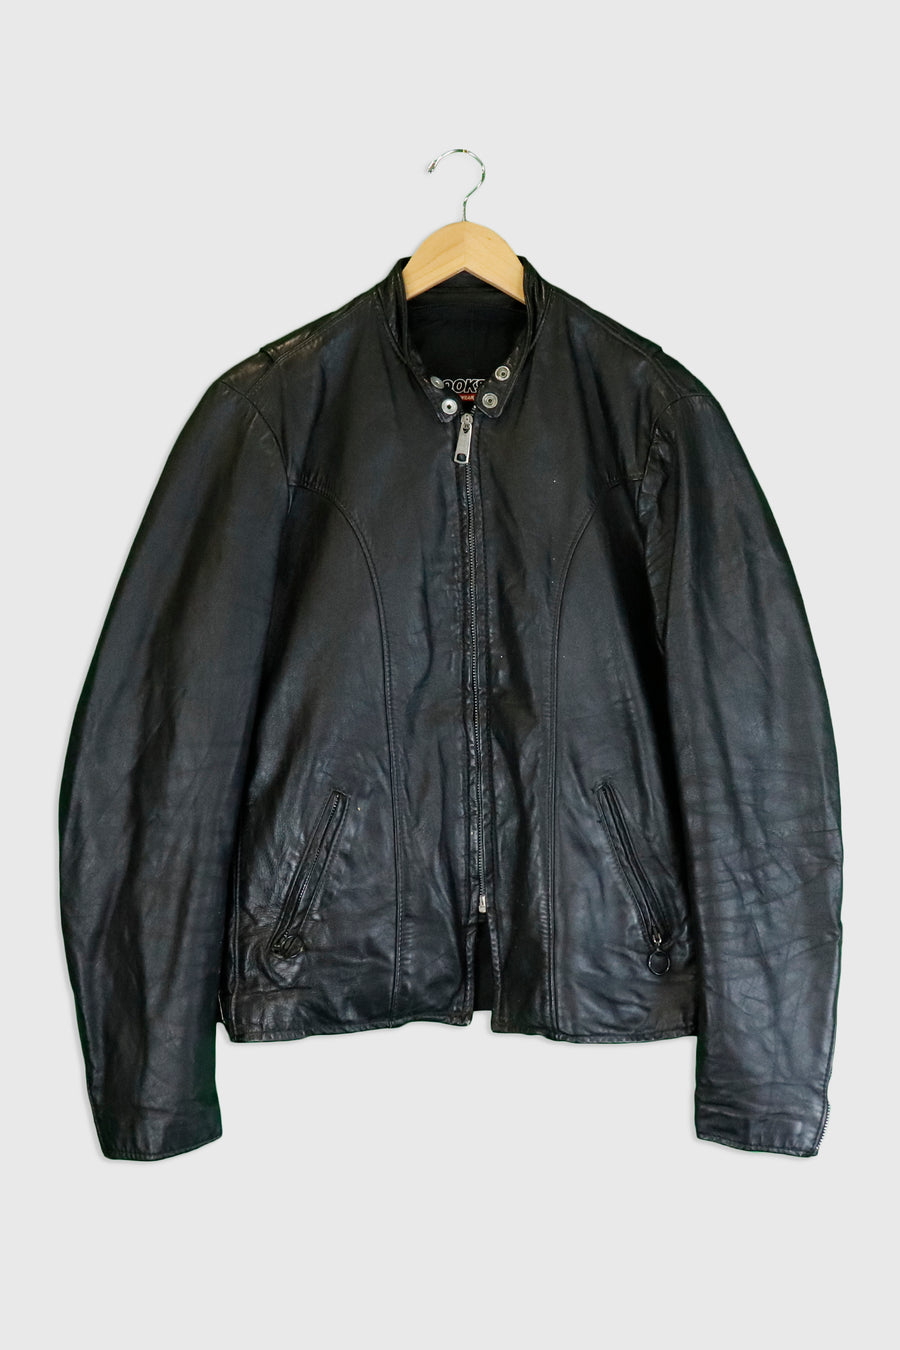 Vintage Brooks Cafe Racer Motorcycle Leather Jacket